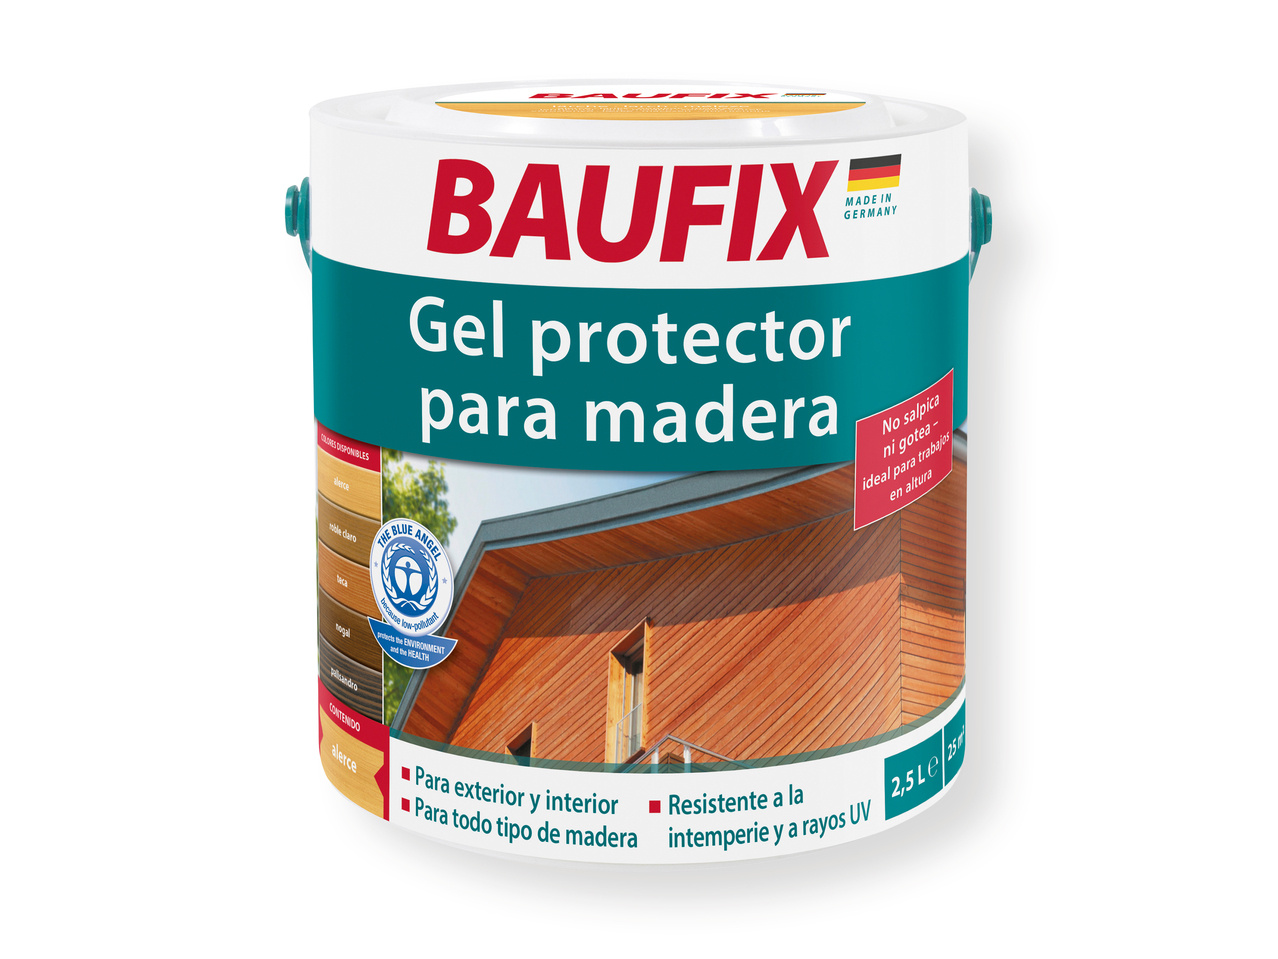 "BAUFIX" Gel protector para madera